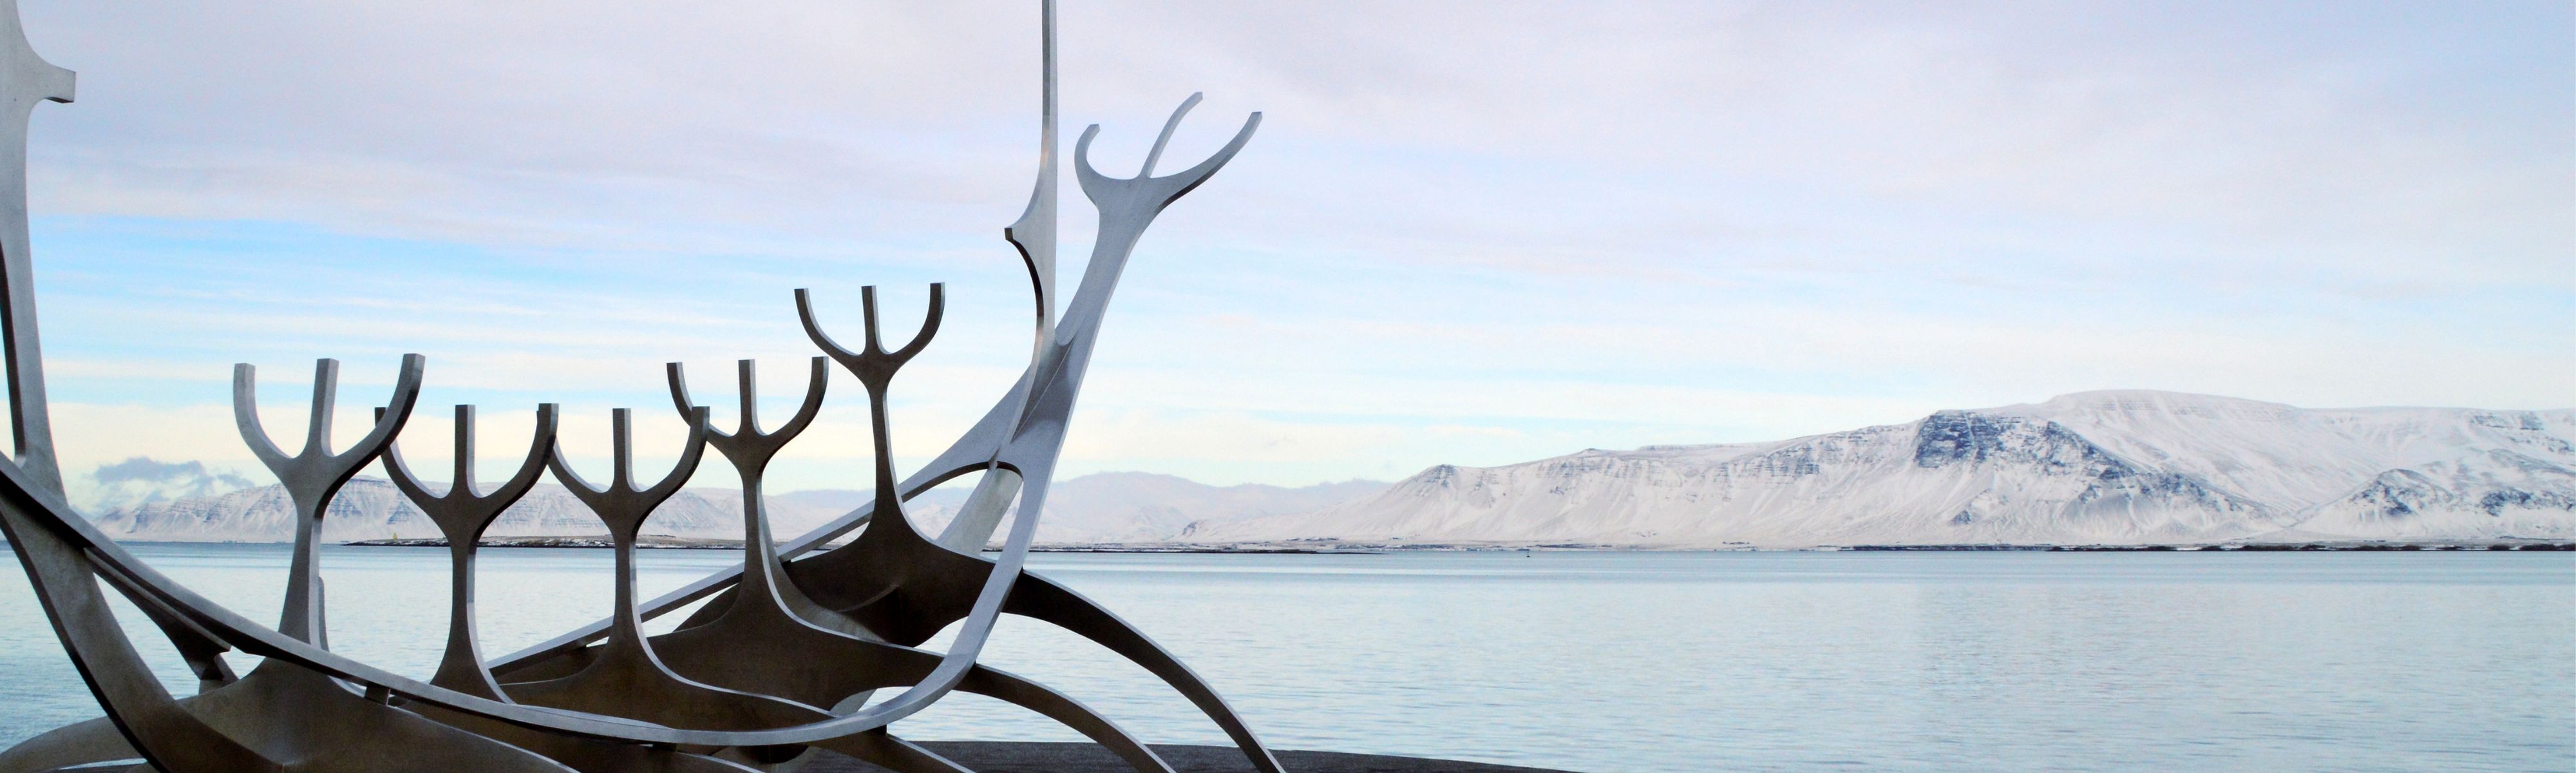 viking ship statue on the coast of reykjavik in iceland